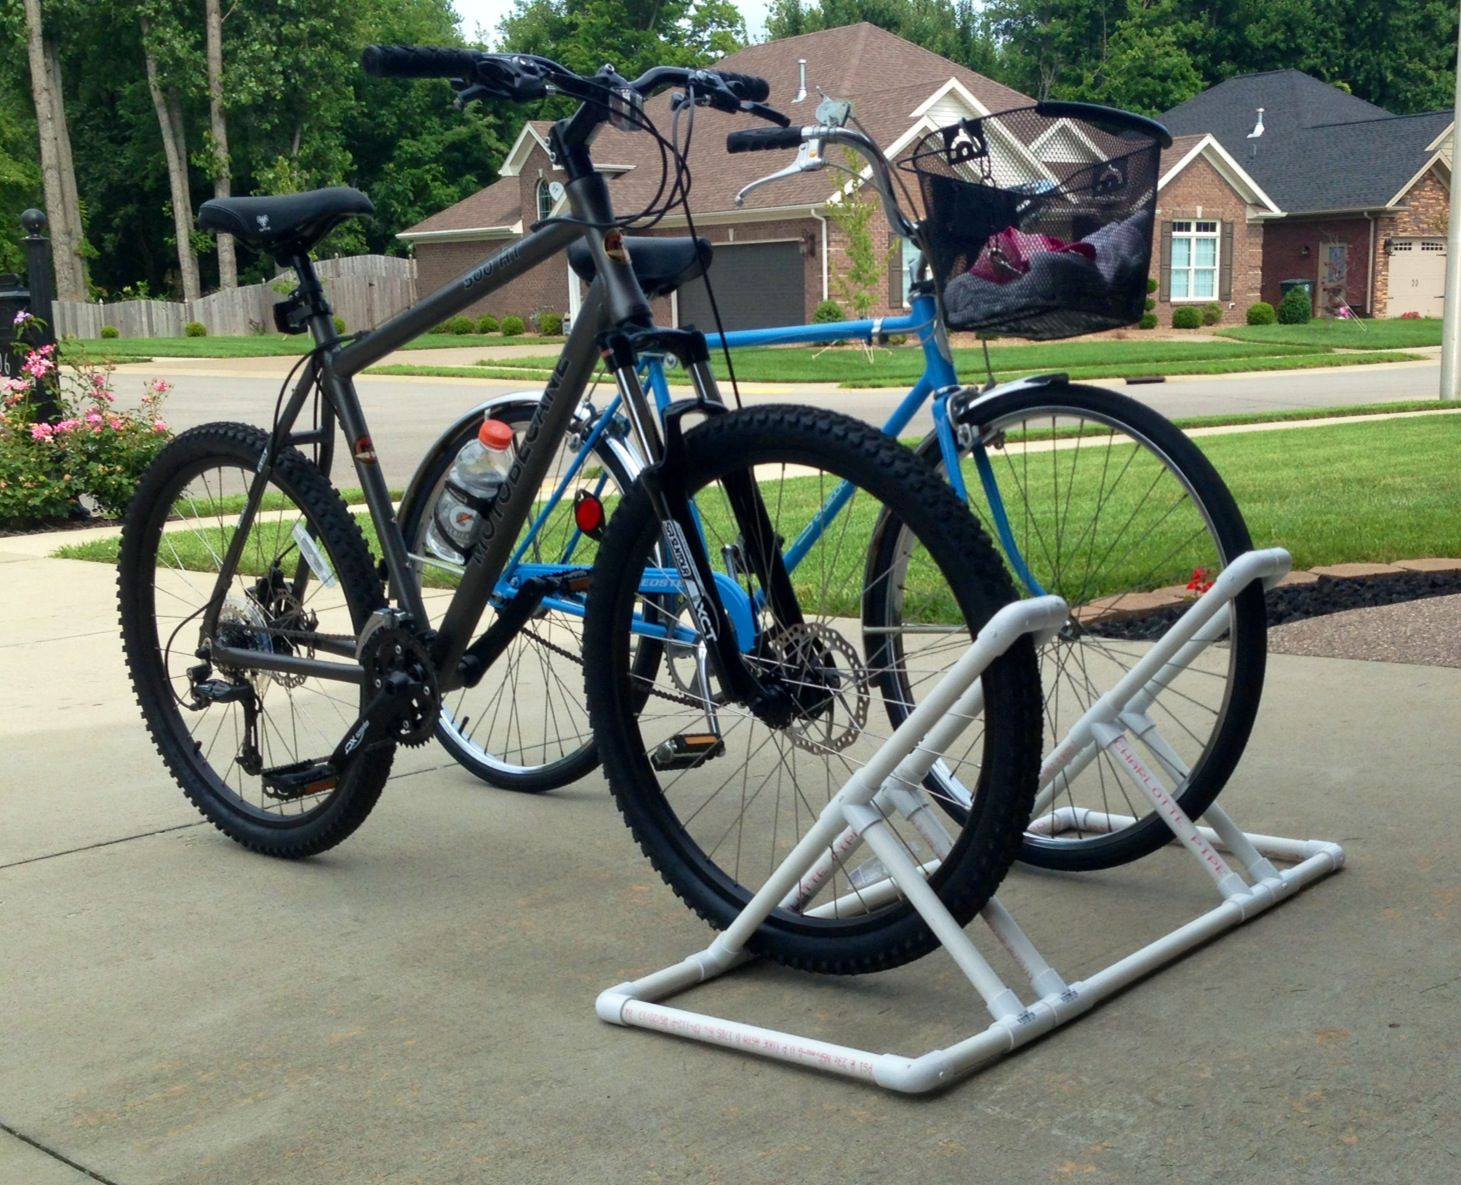 DIY Bike Rack Pvc
 Bike rack made of PVC For My Hubby